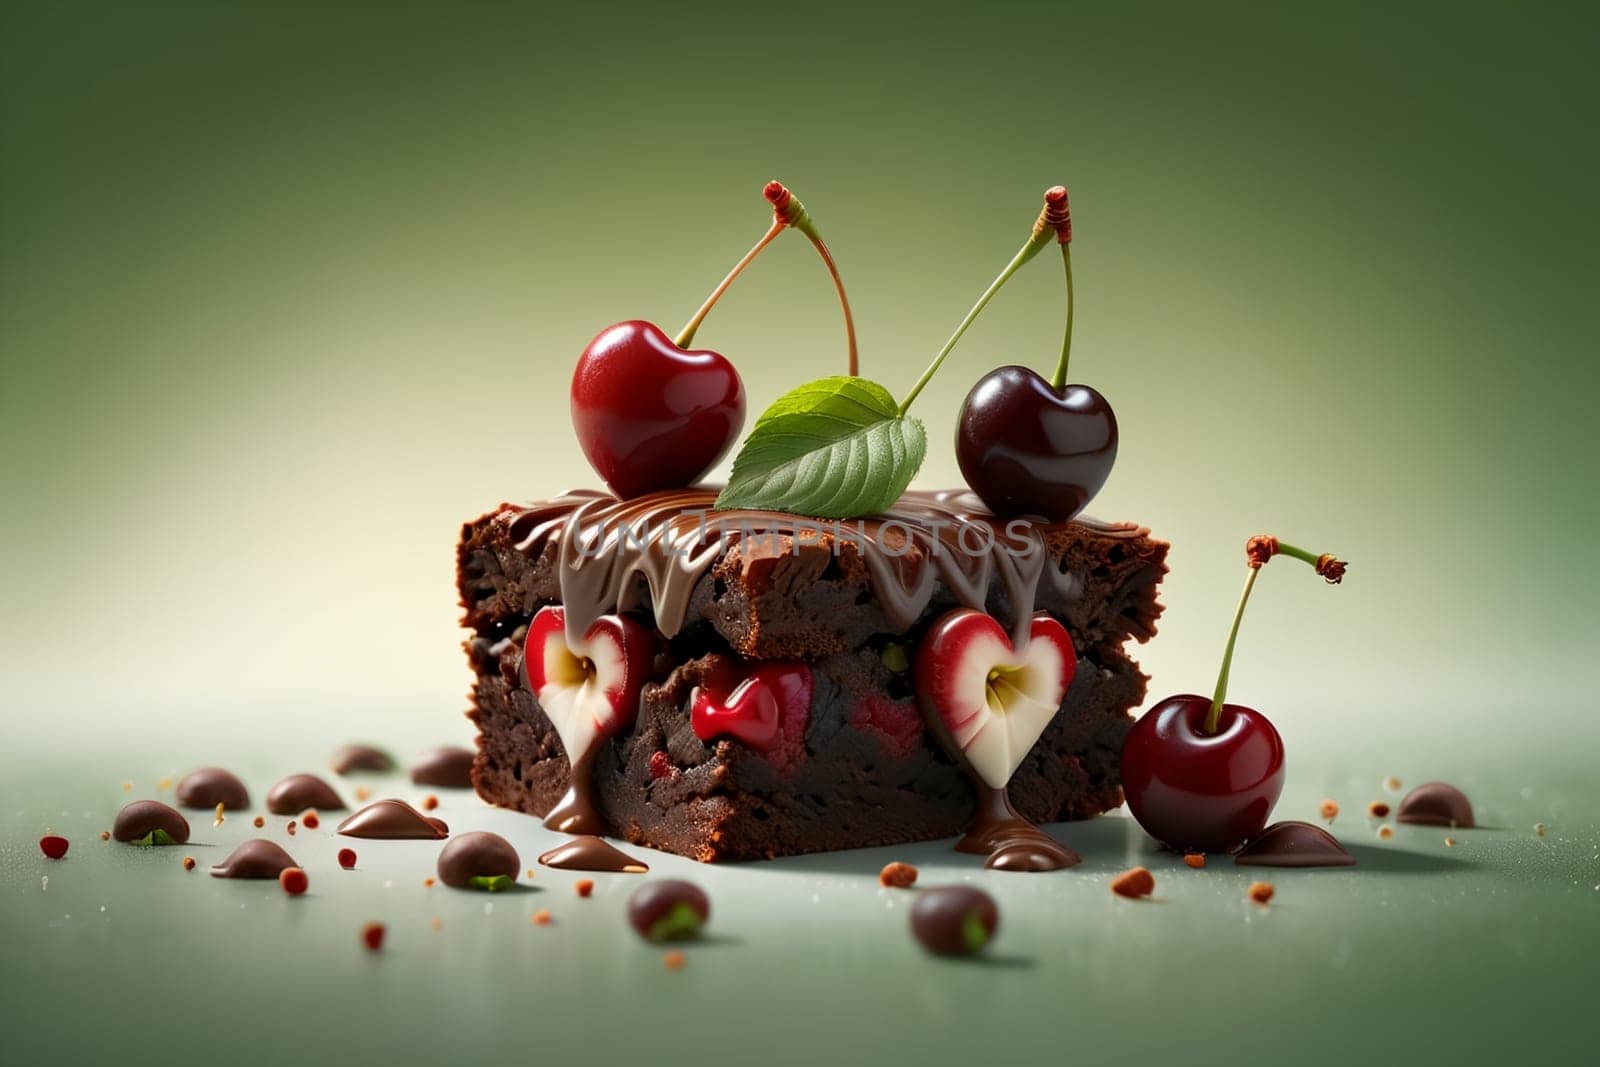 brownie cake with chocolate and cherry, glazed .